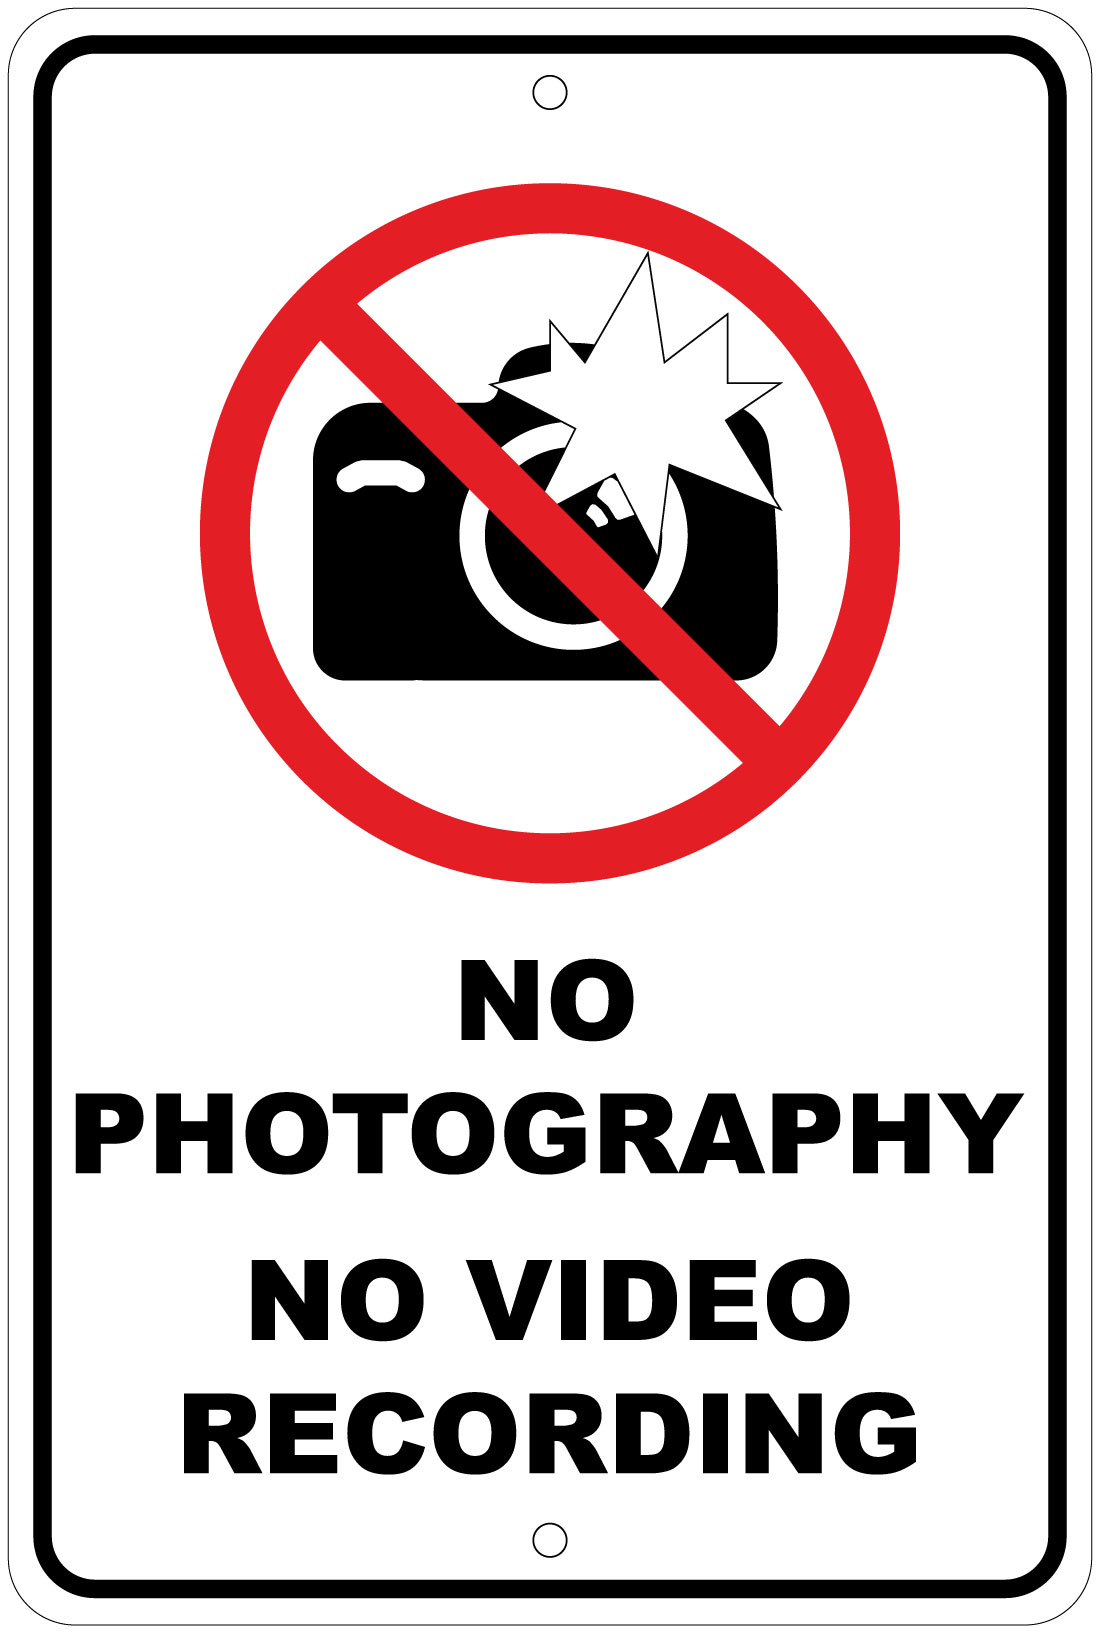 No Photography or Video Recording Warning 8